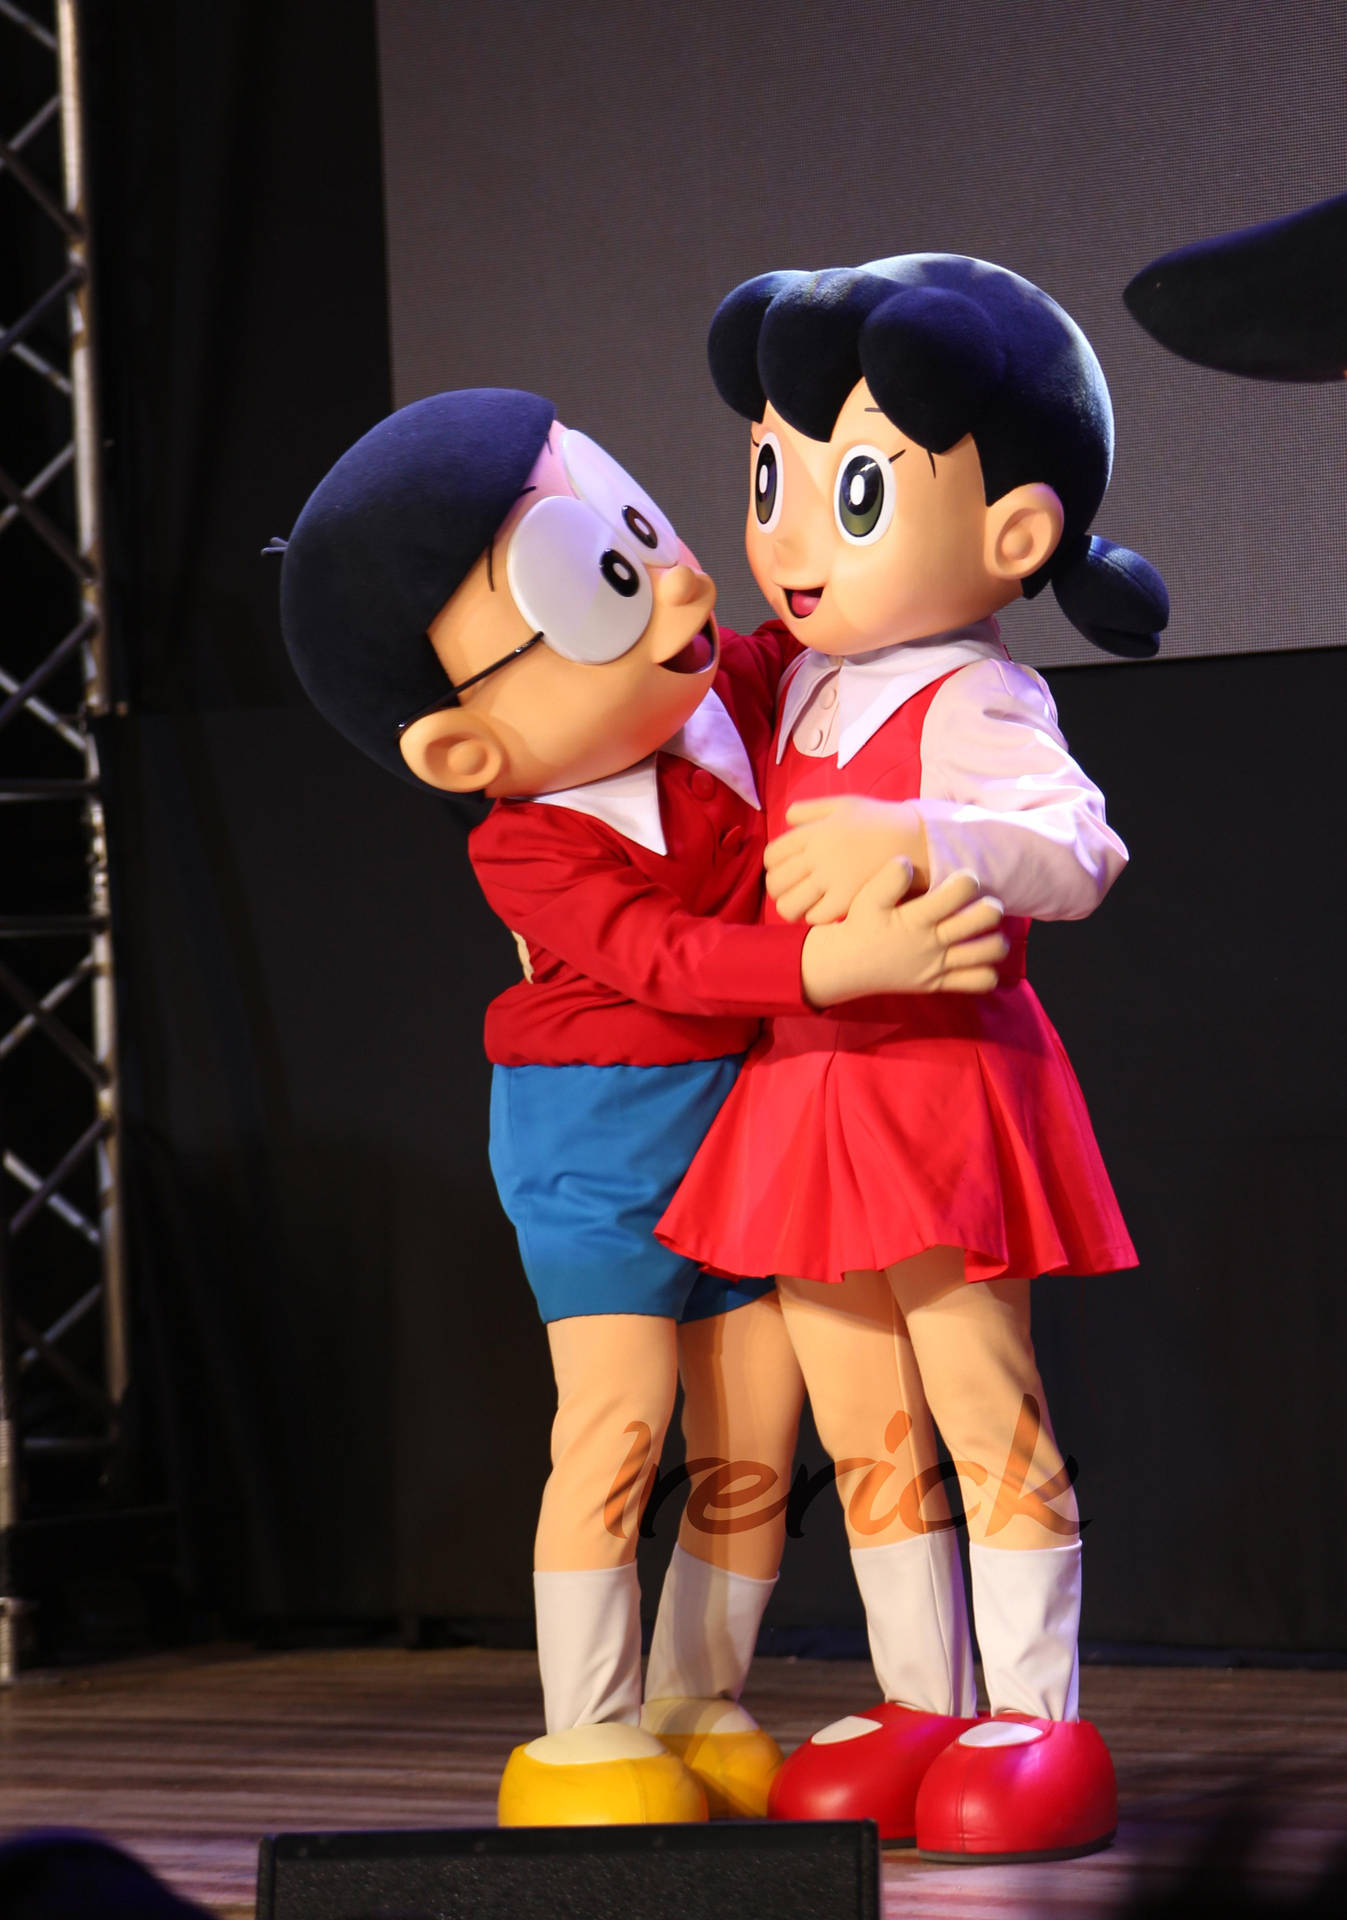 Nobita Shuzuka dp photo |Nobita Shuzika cute images|Nobita Shizuka  dpz|Nobita & Shizuka love photo - YouTube